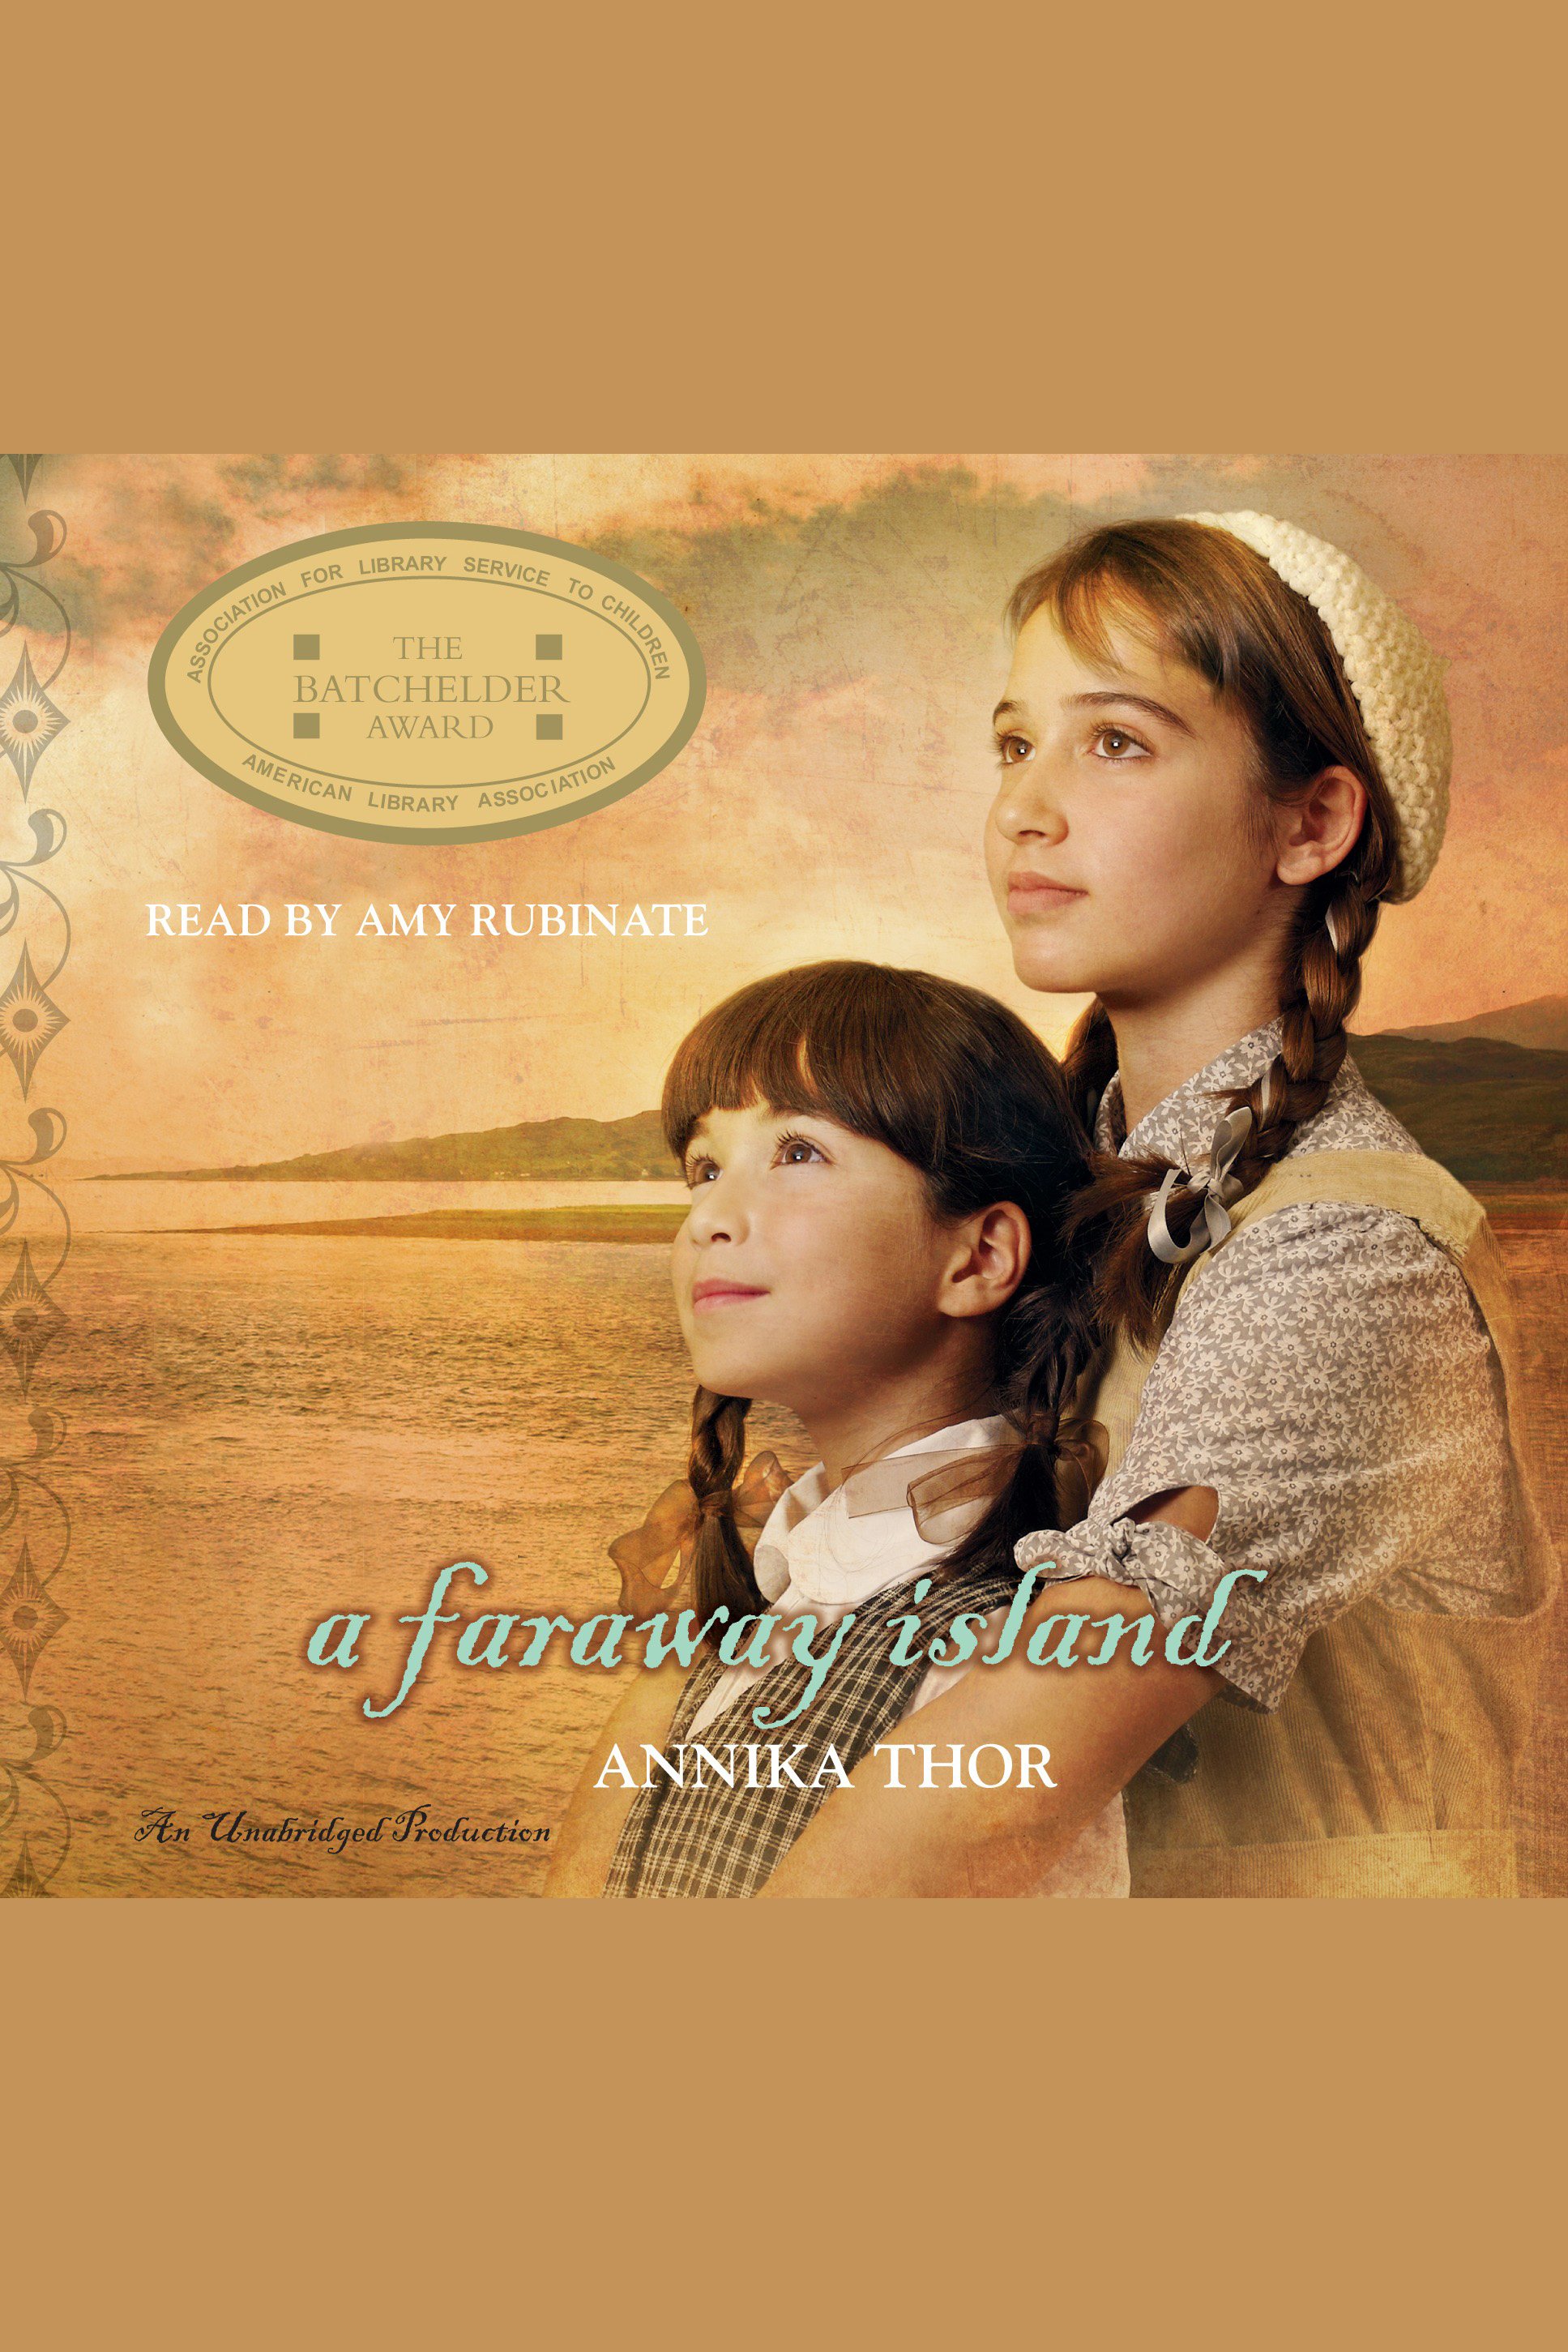 A faraway island cover image